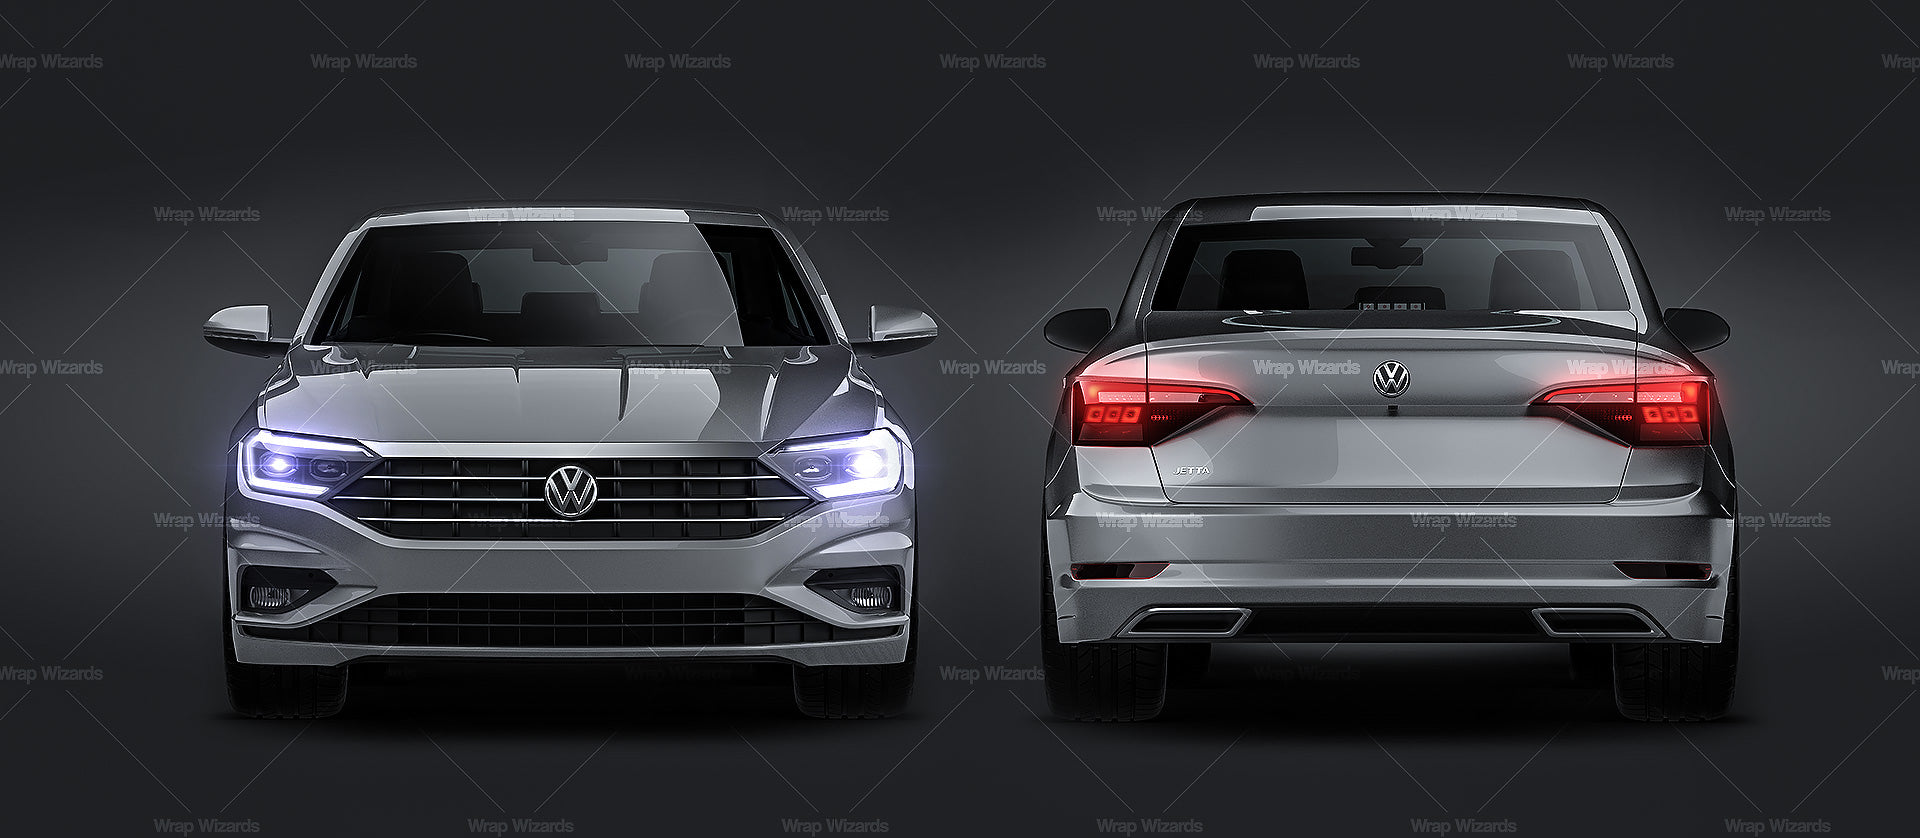 Volkswagen Jetta 2019 - Car Mockup